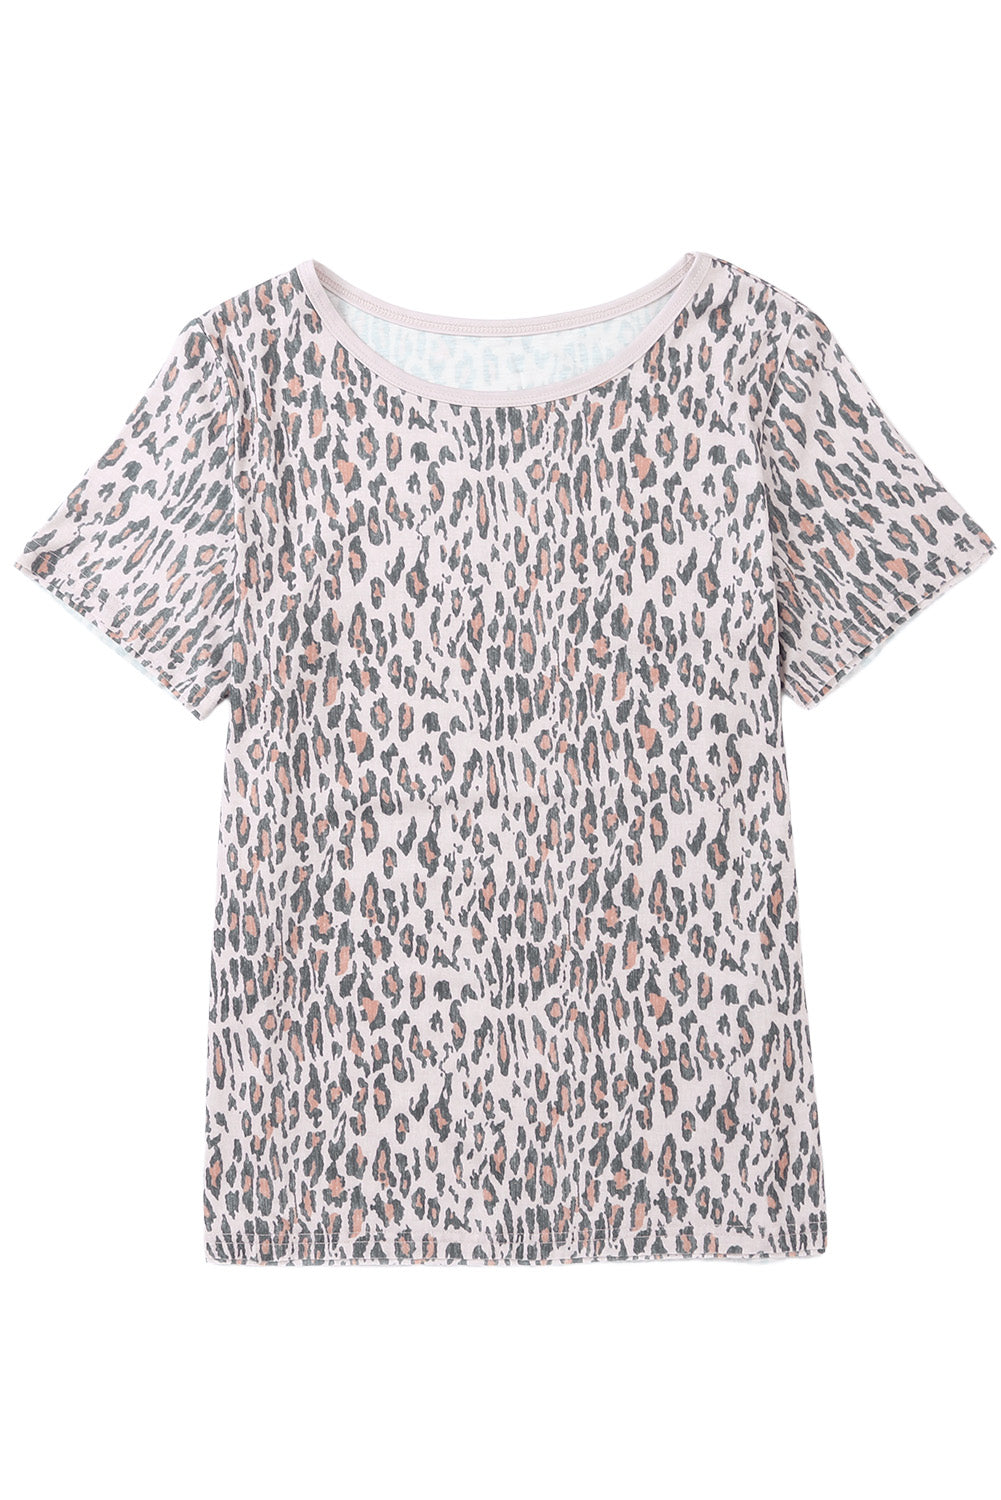 T-shirt casual con stampa animalier leopardata